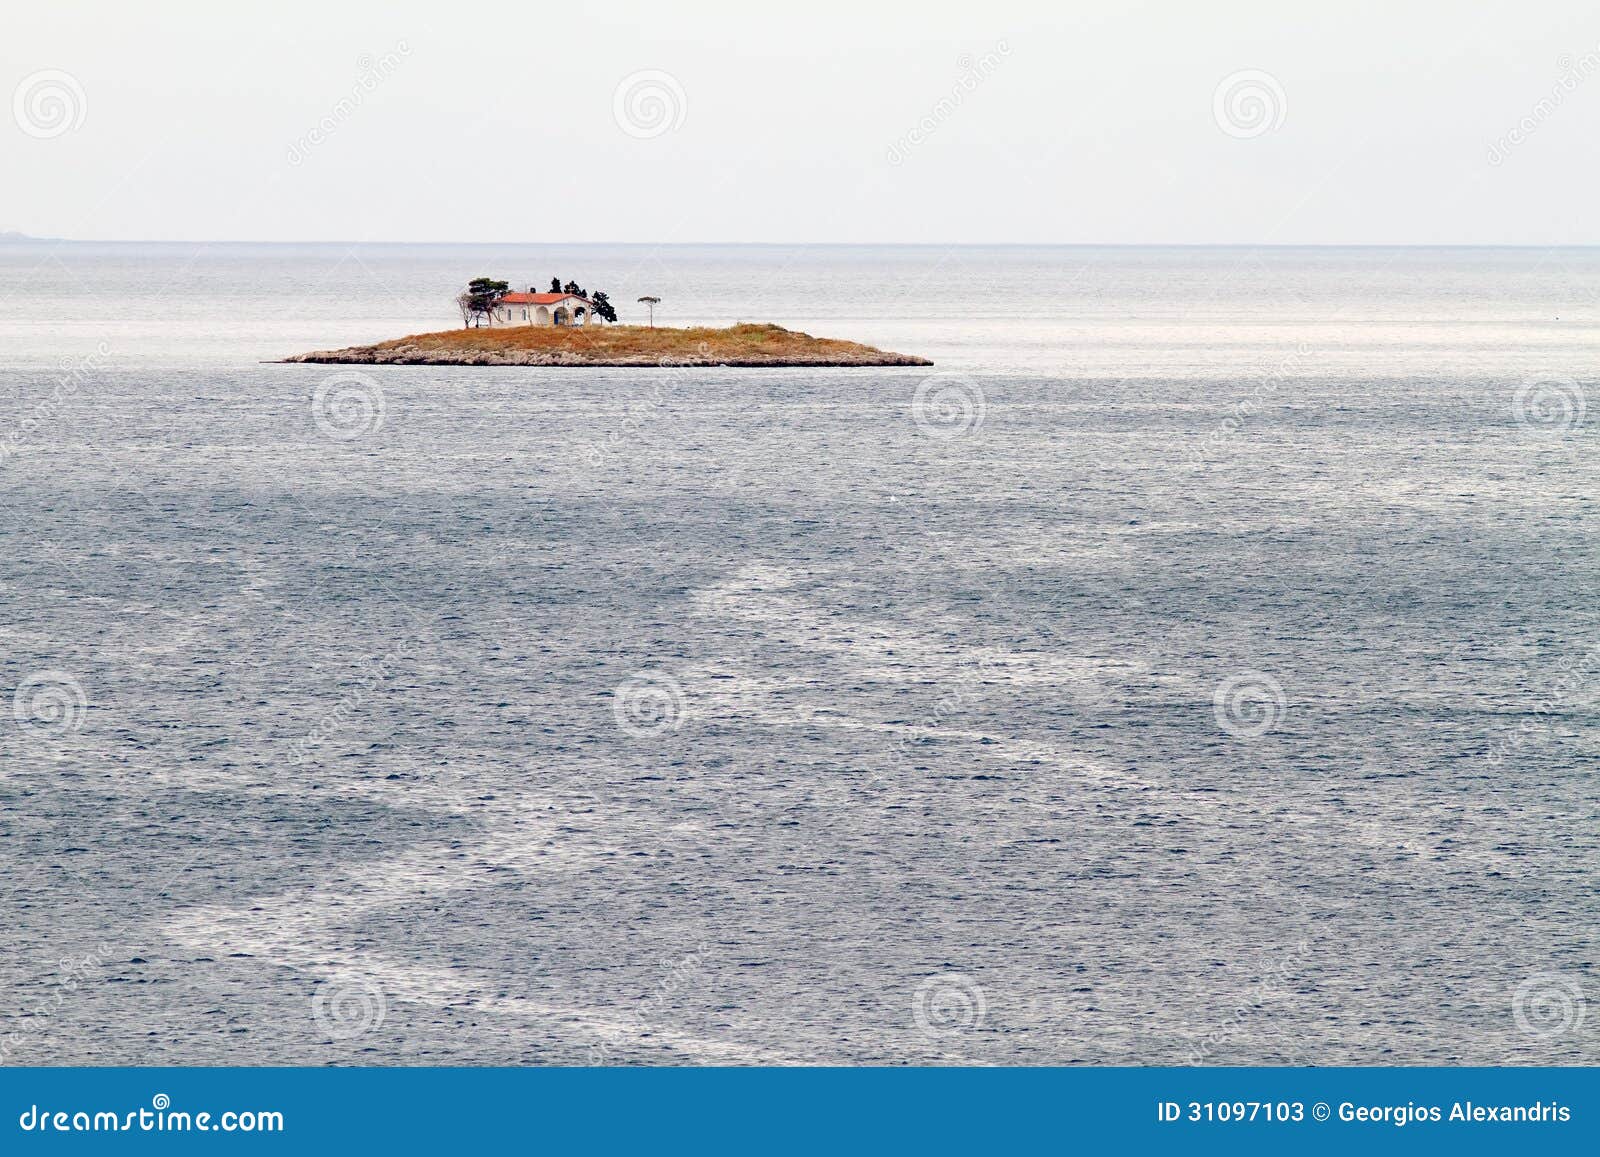 islet, church and ocean